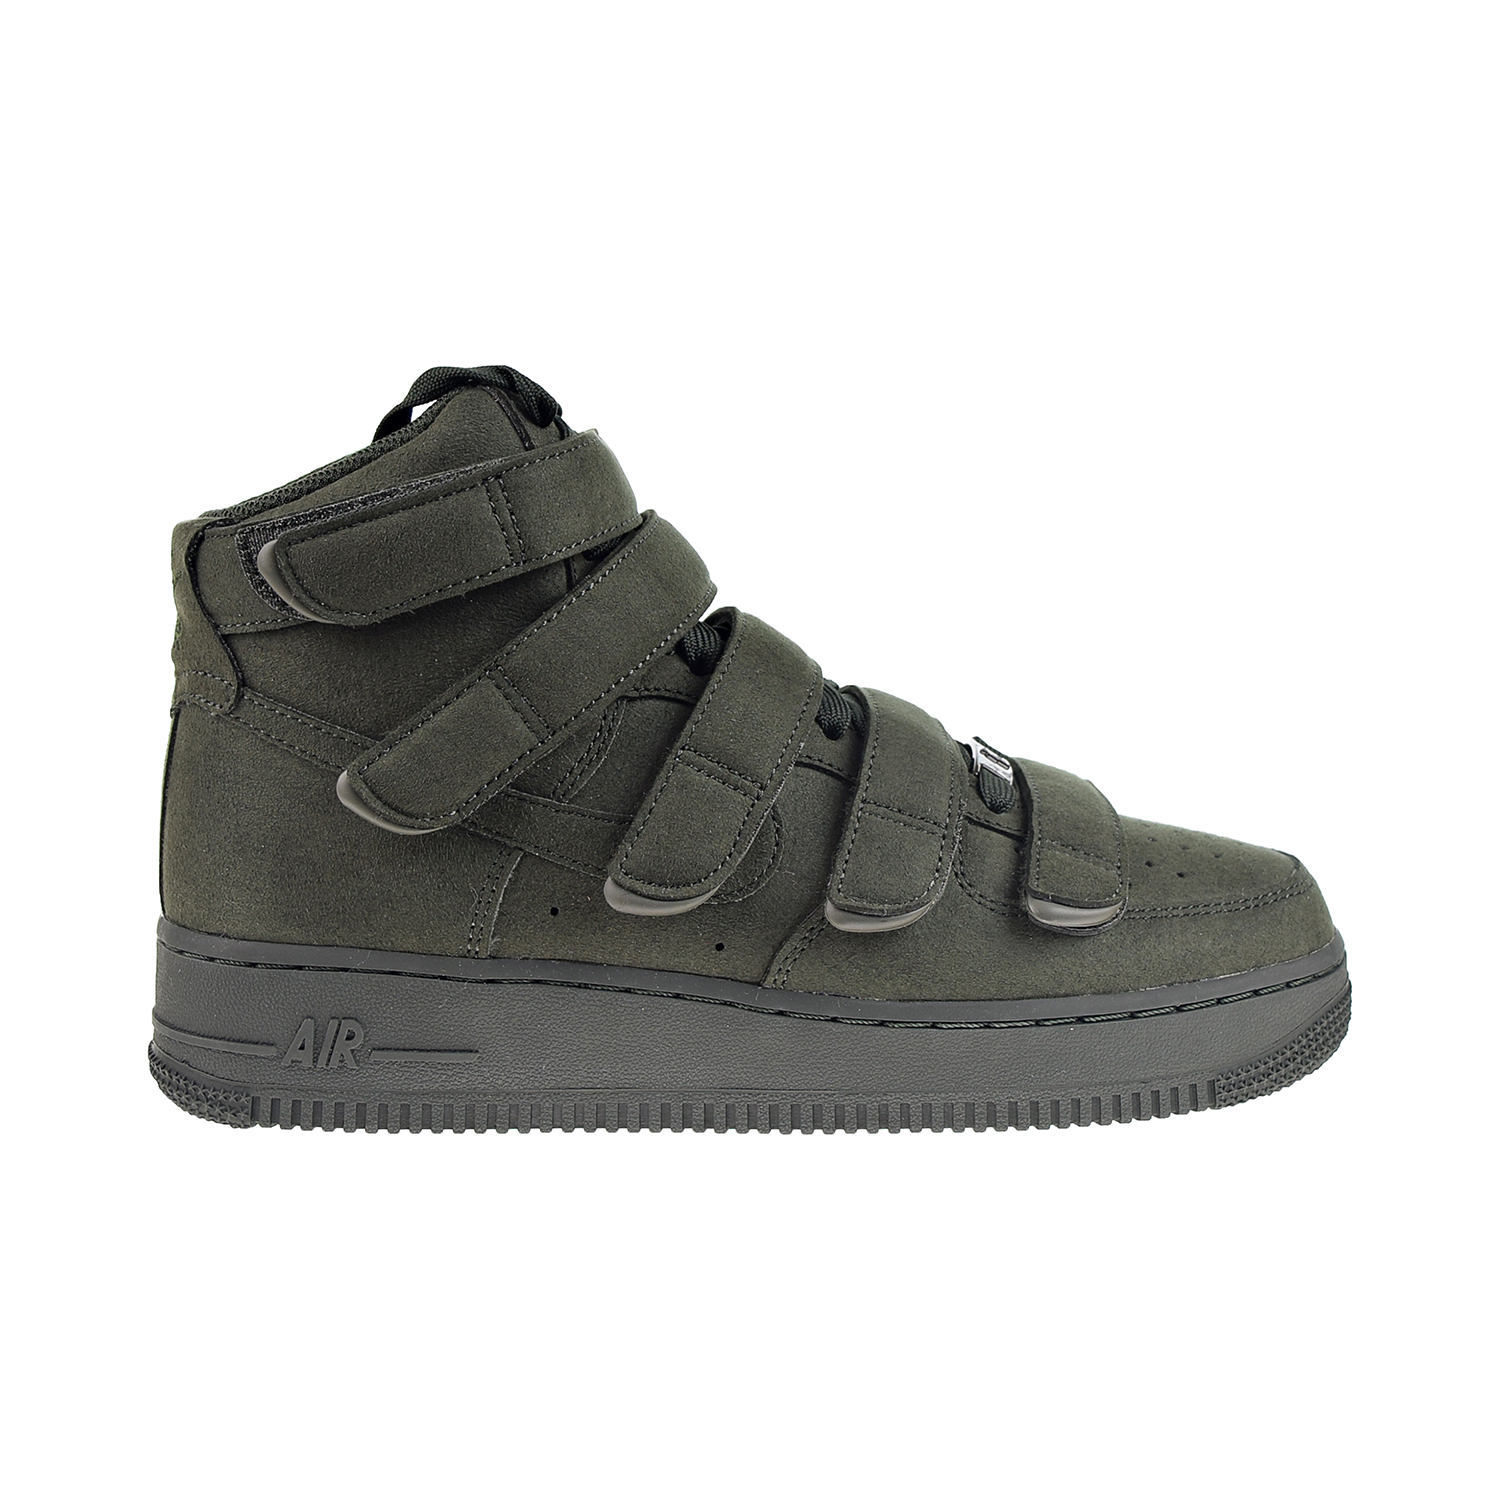 Nike Air Force 1 High x Billie Eilish Men's Shoes Sequoia dm7926-300